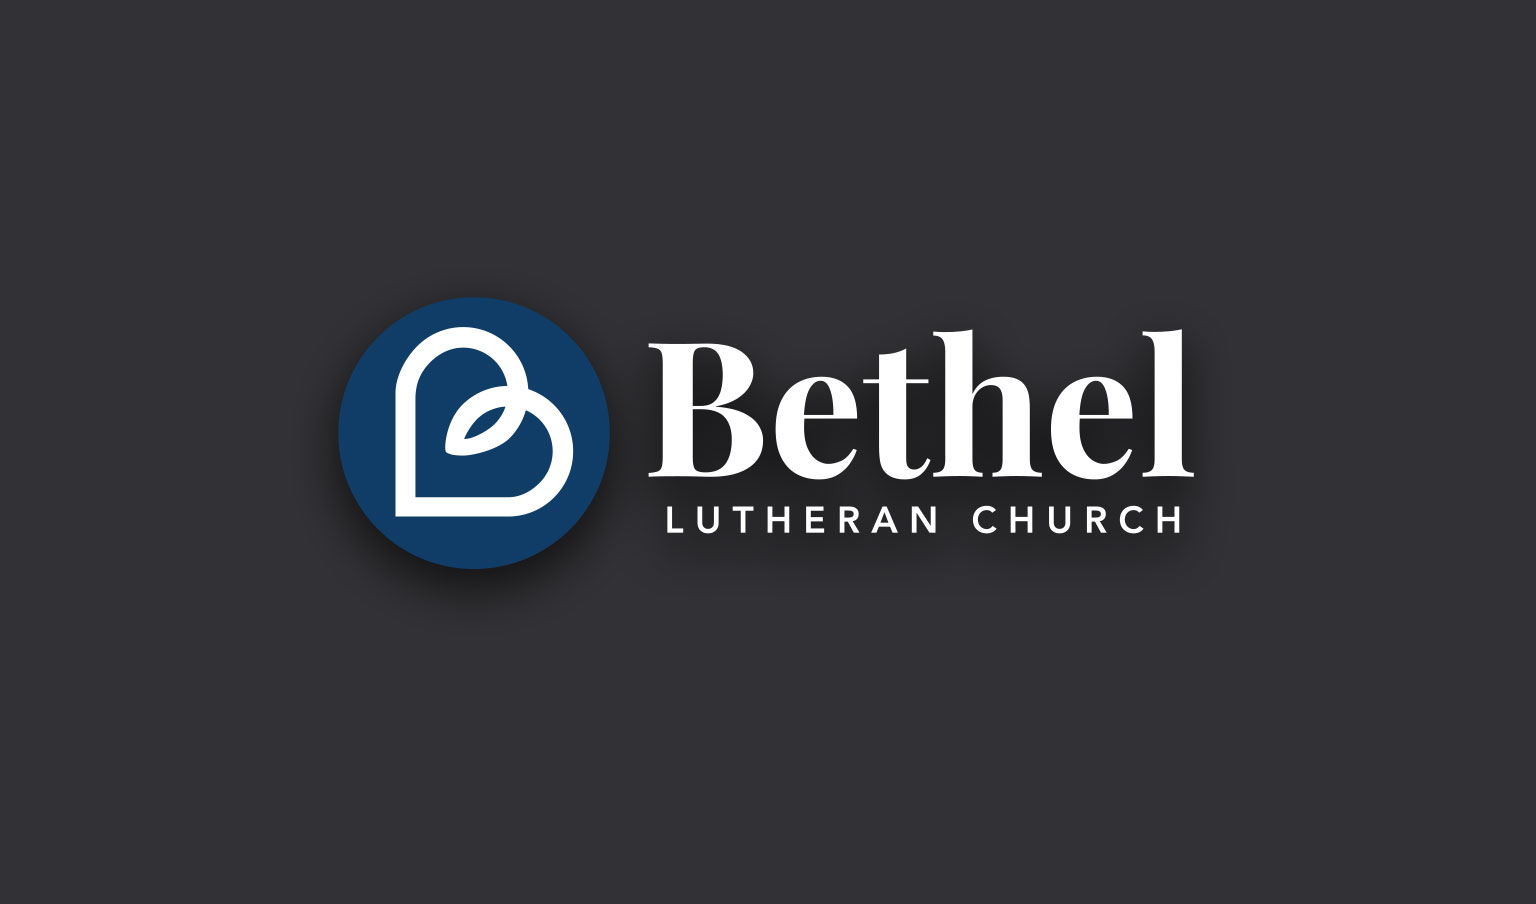 bethel lutheran church logo on gray